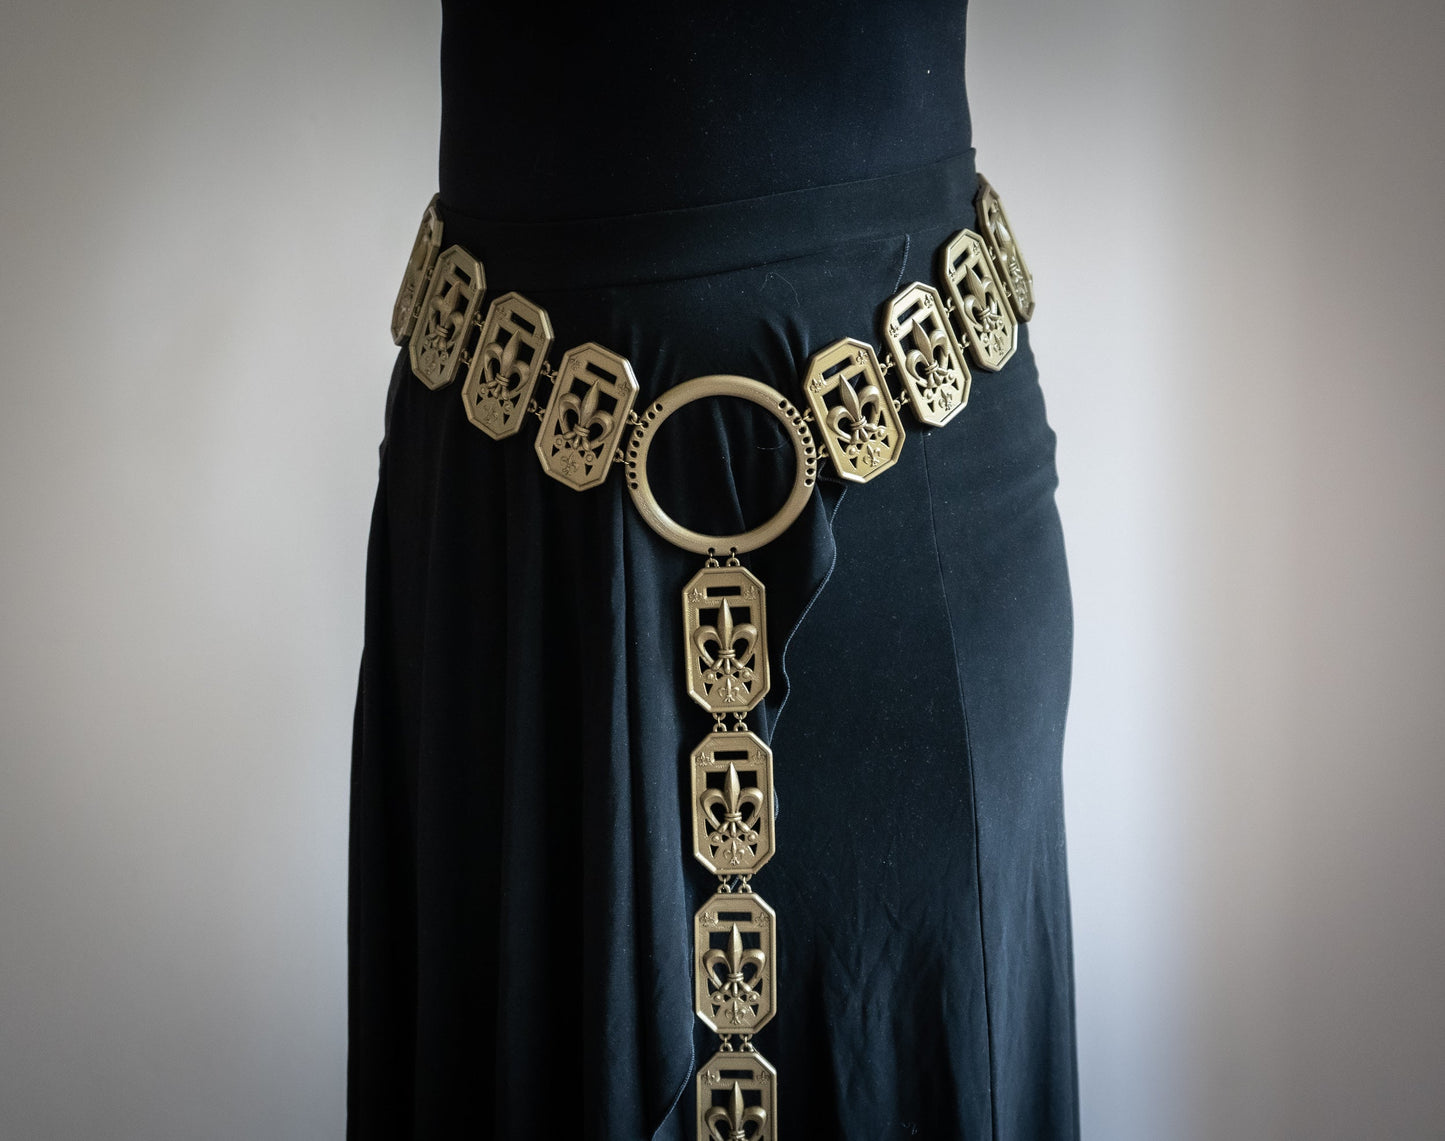 Belt stylized as a medieval